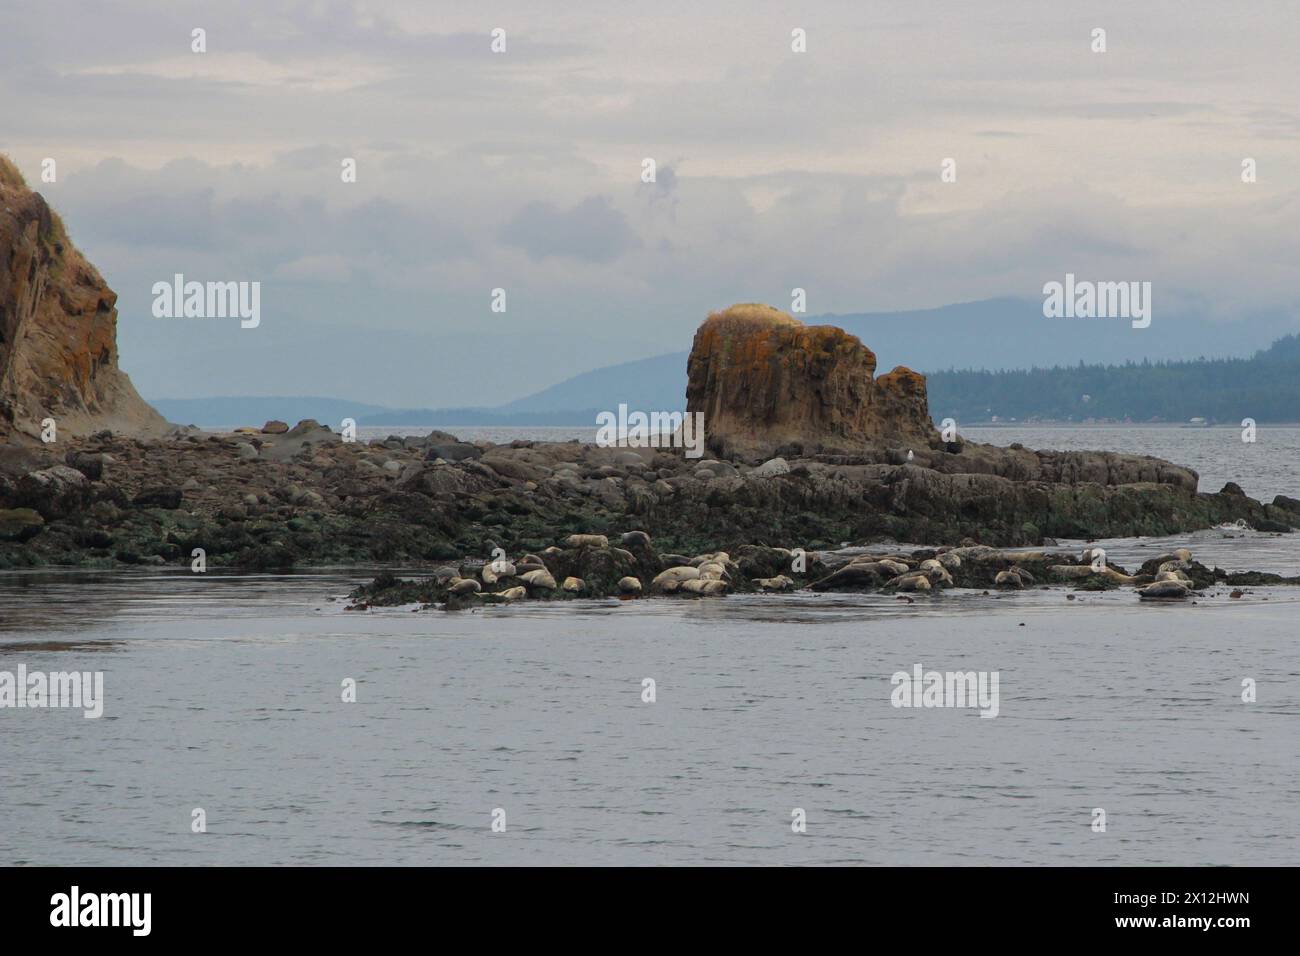 Seals lounging on coastal rocks under an overcast sky Stock Photo